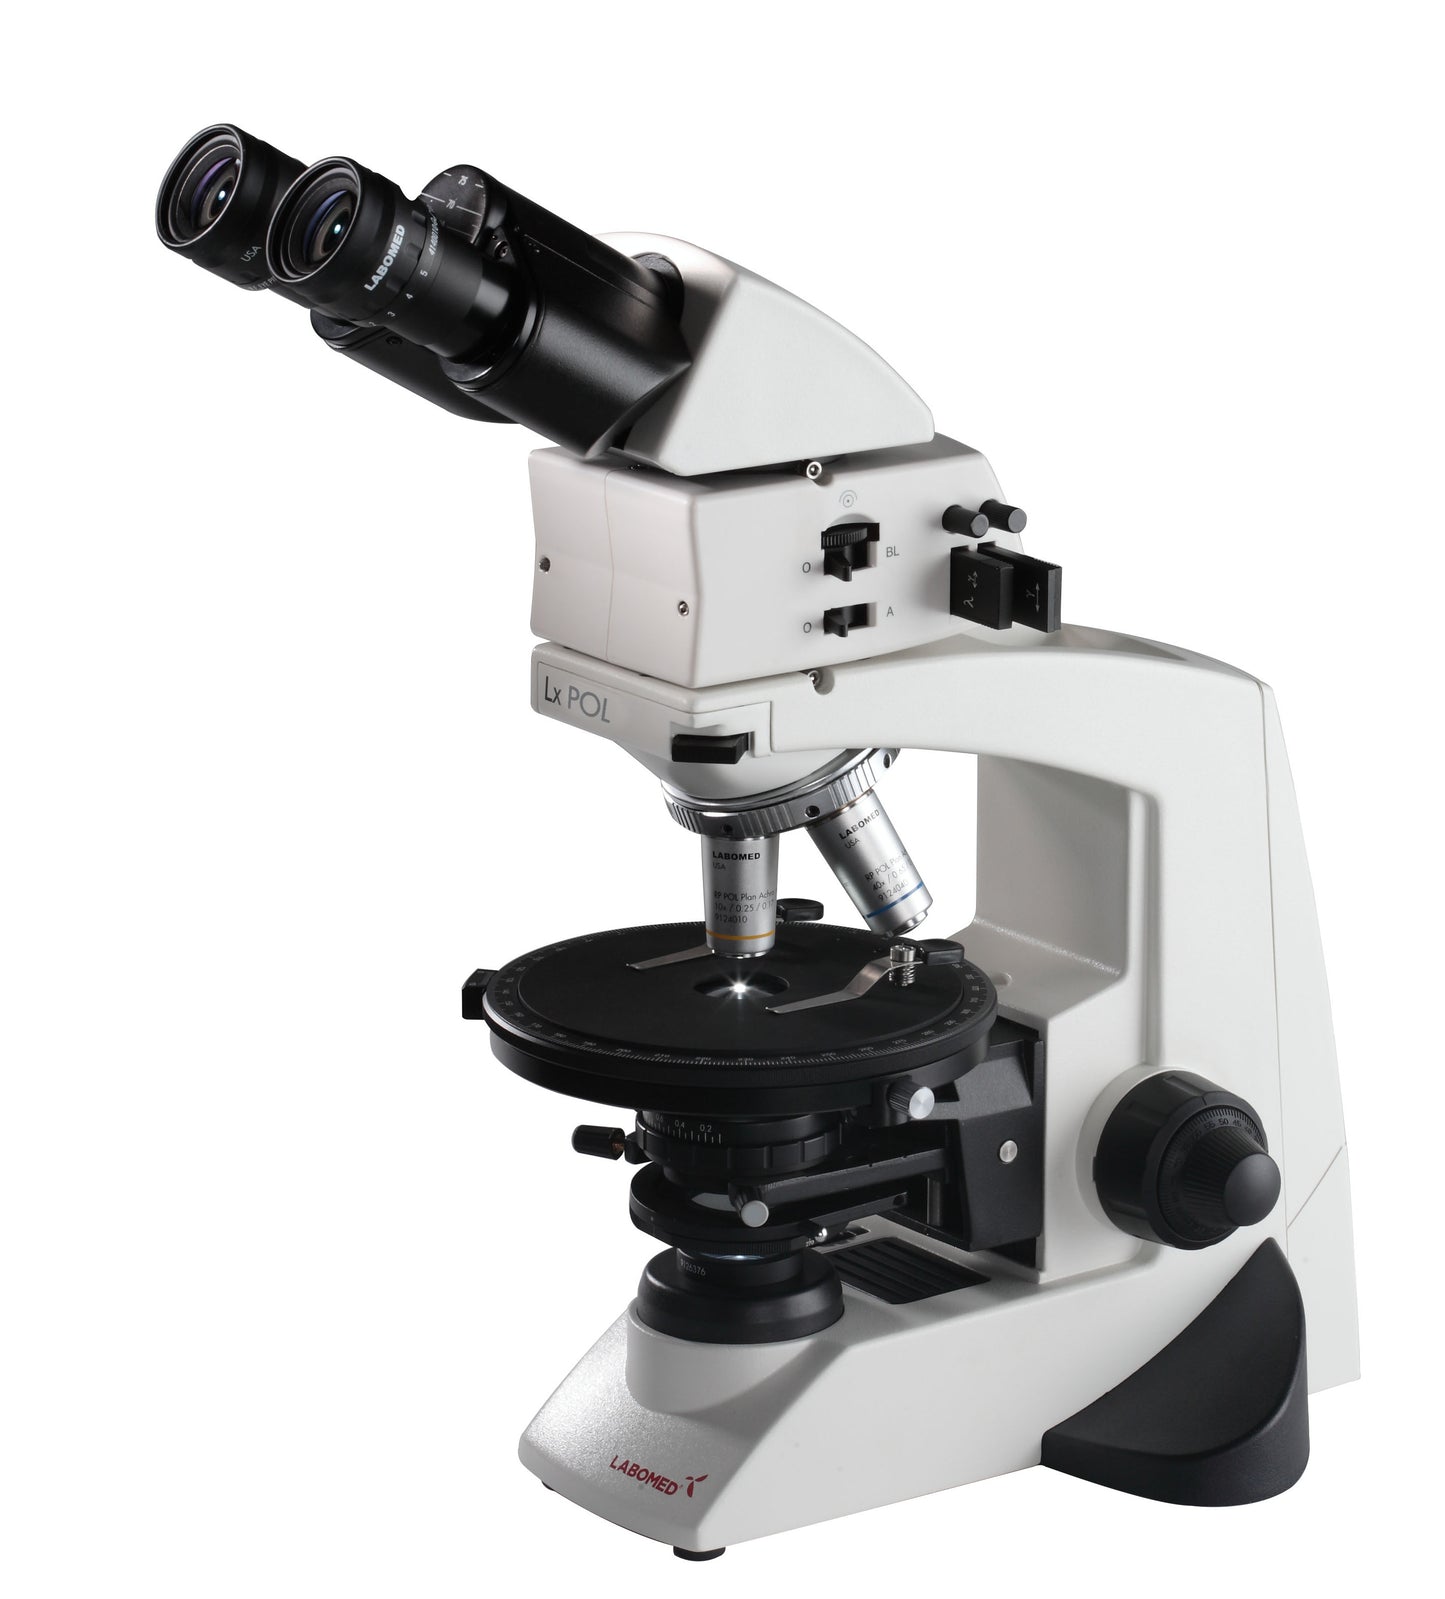 Labomed Lx Pol Polarizing Microscope - Microscope Central - 1